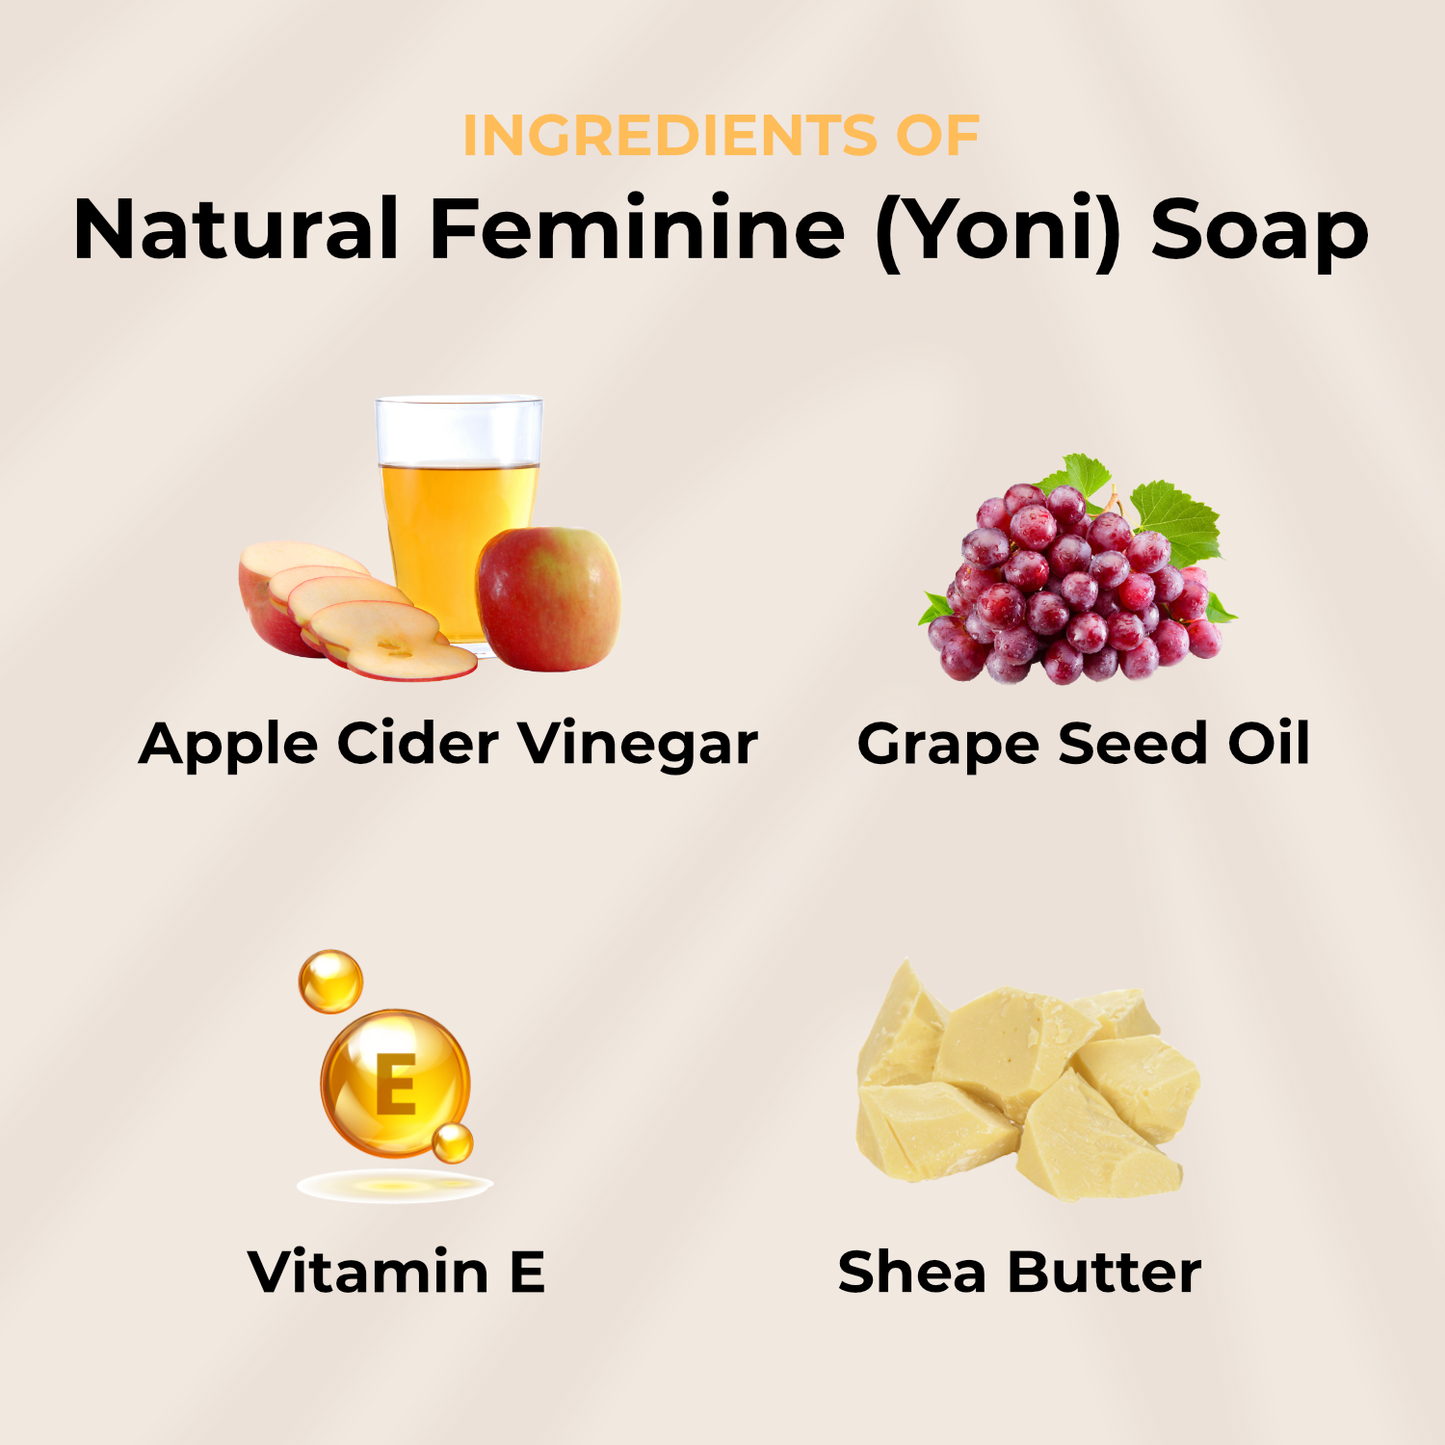 Natural Feminine (Yoni) Soap